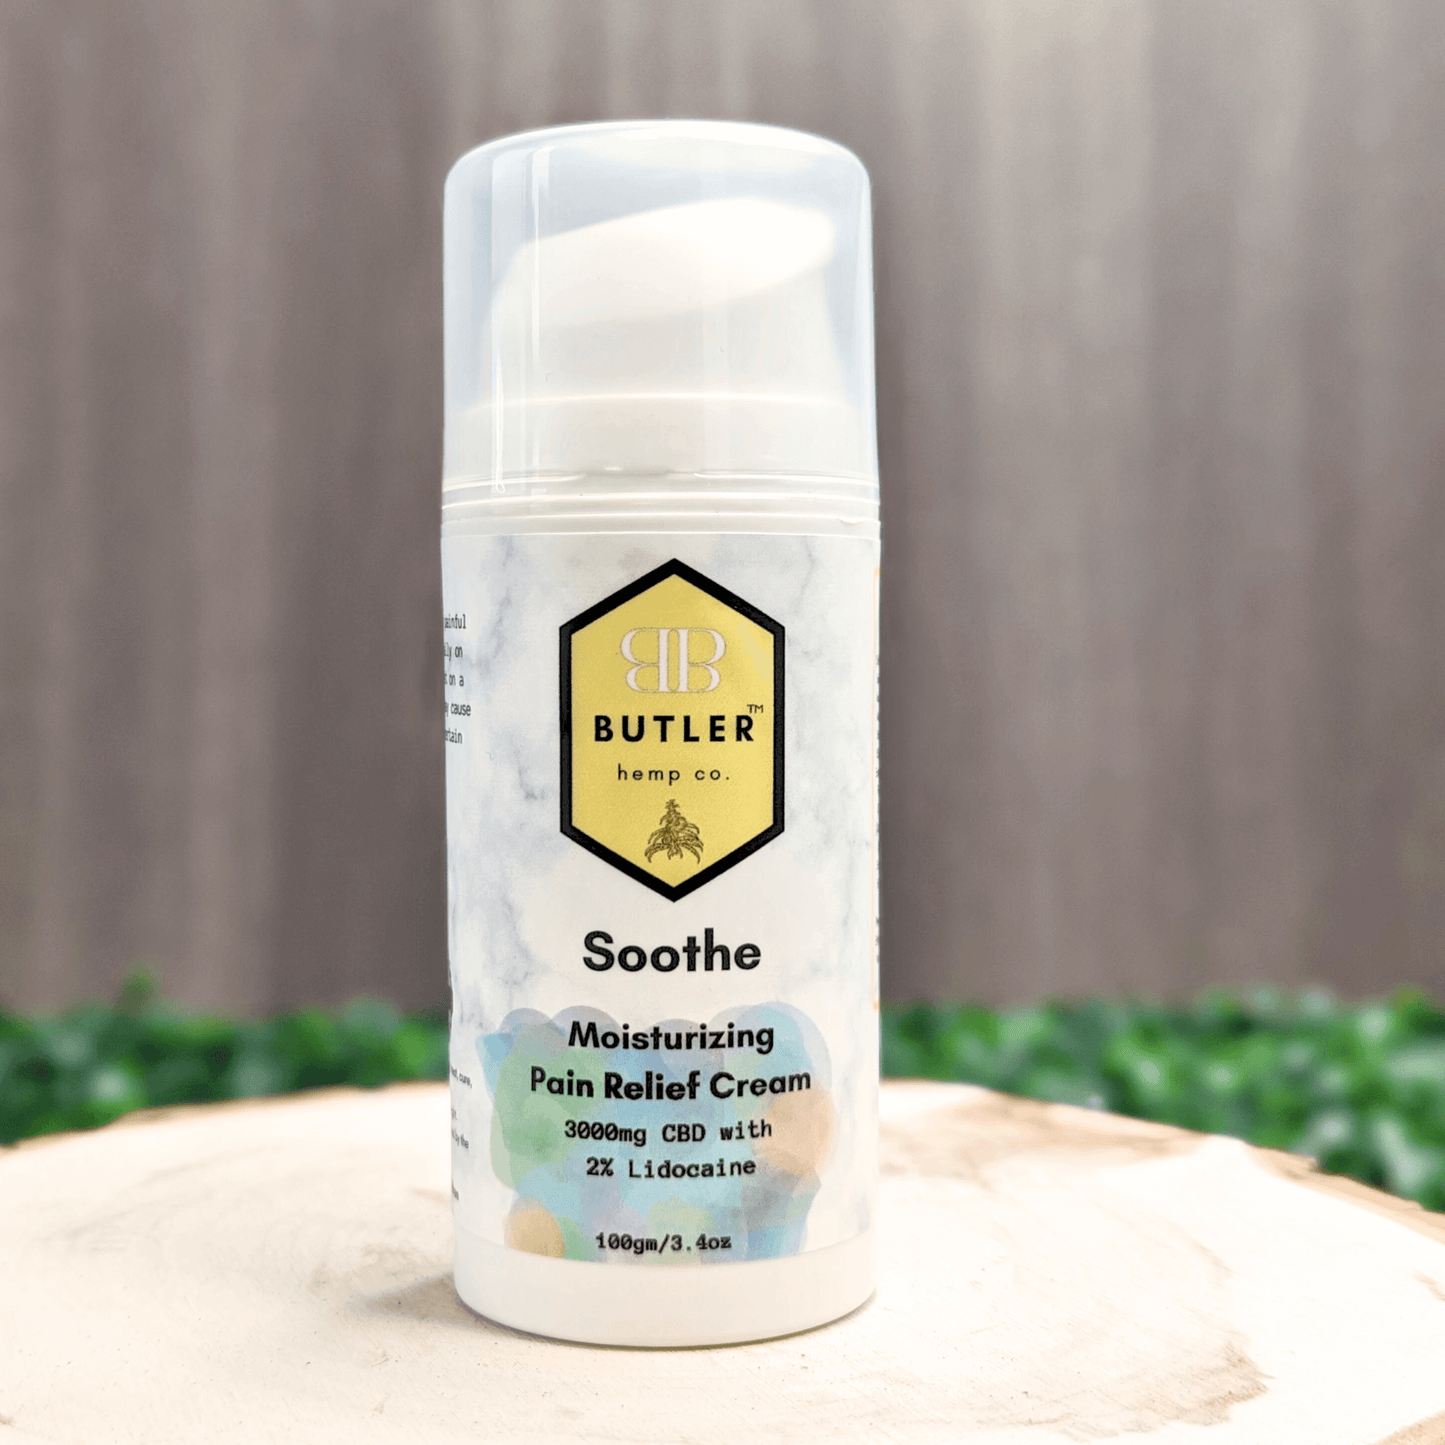 Soothe Moisturizing Relief Cream